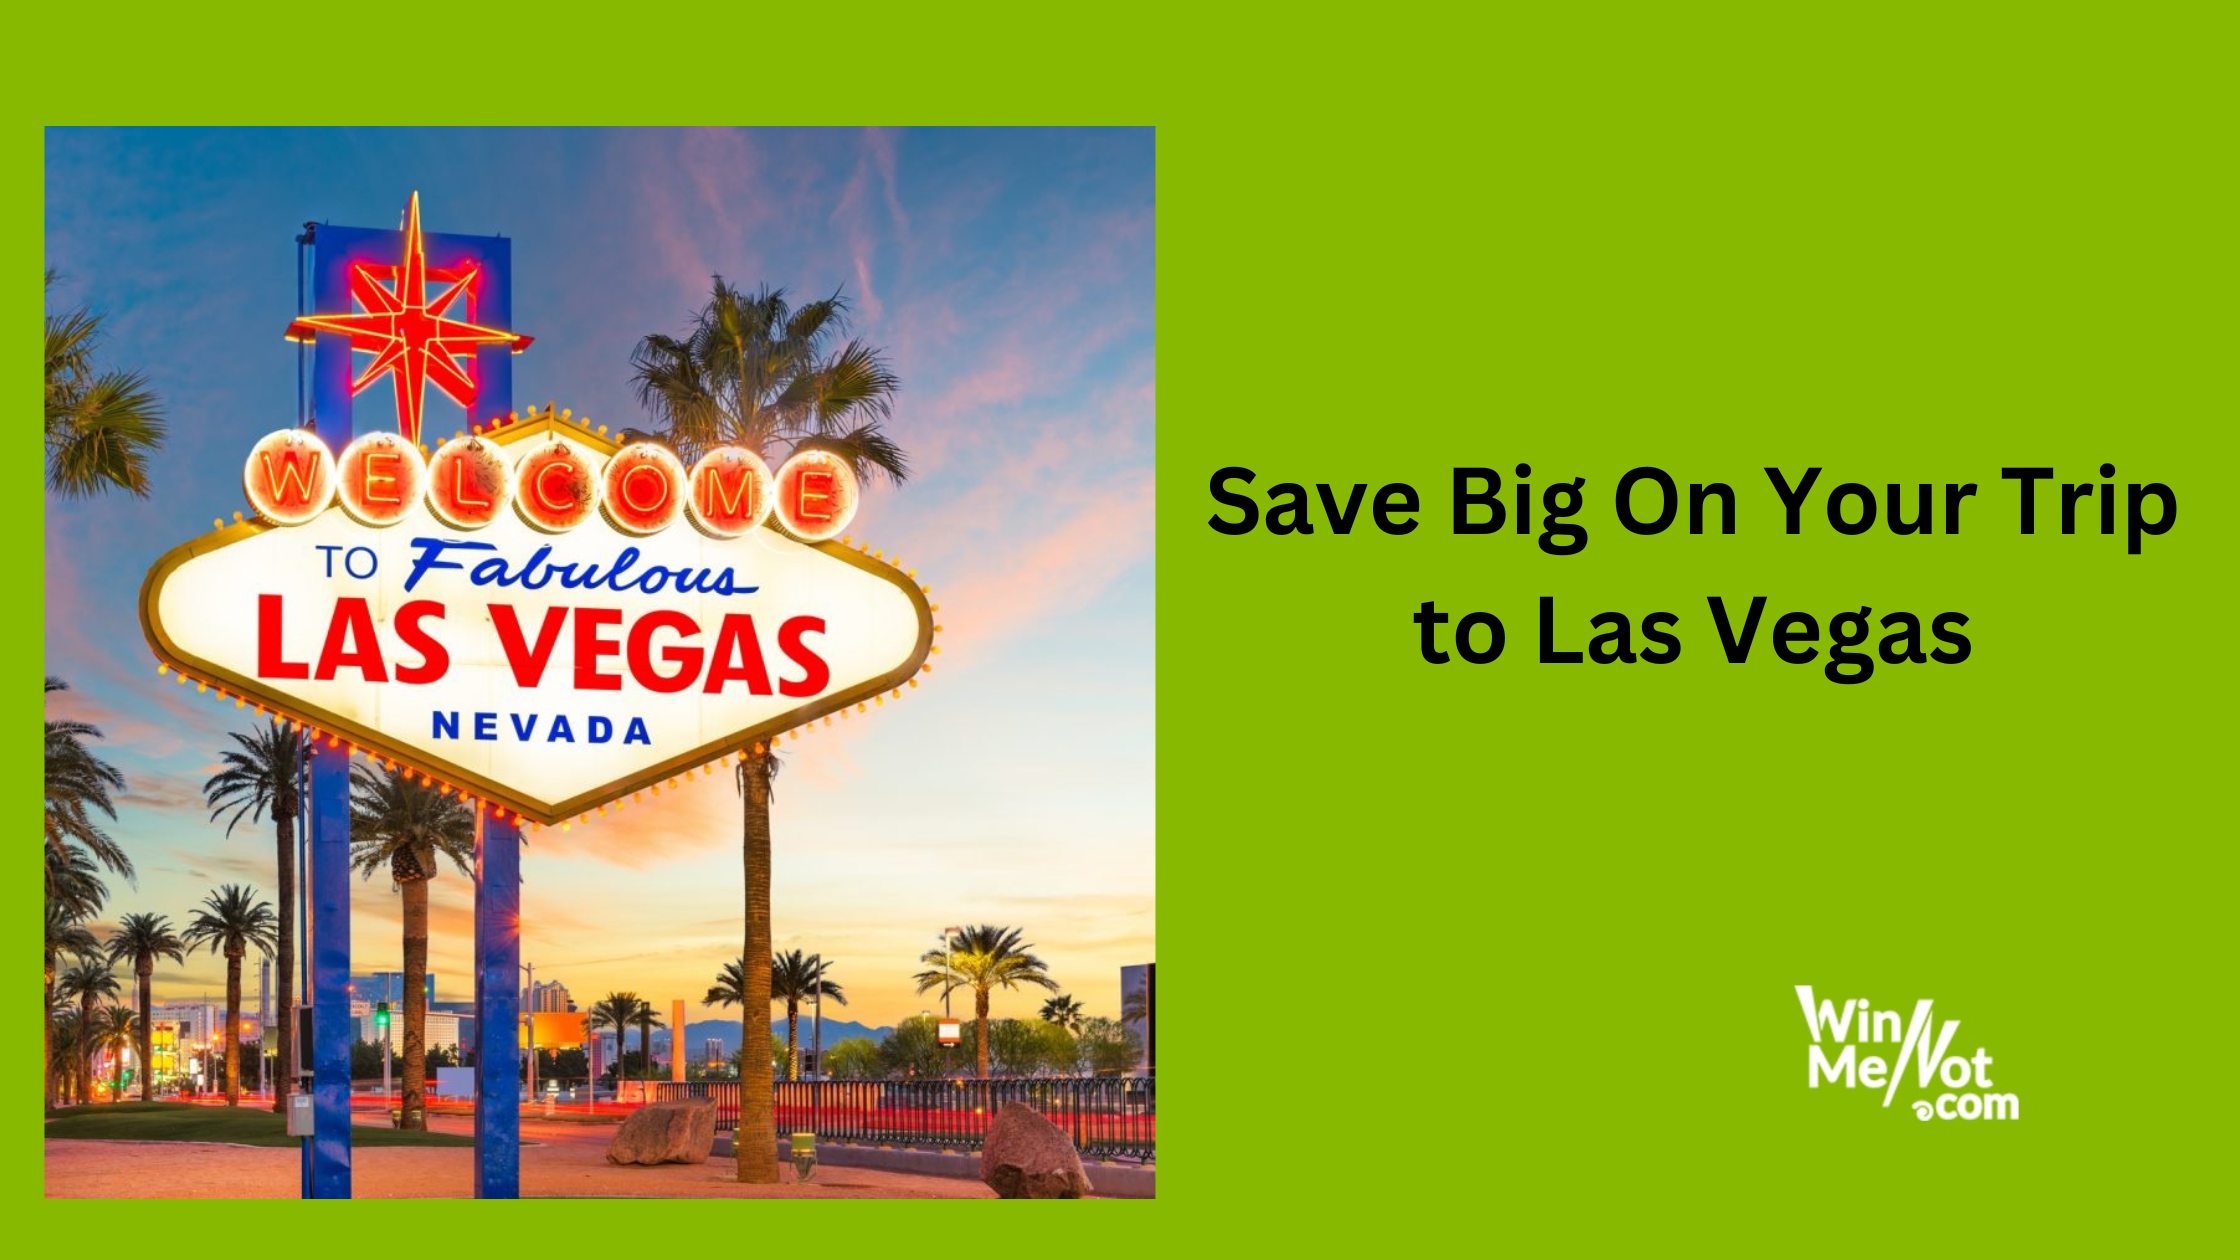 Save Big On Your Trip to Las Vegas